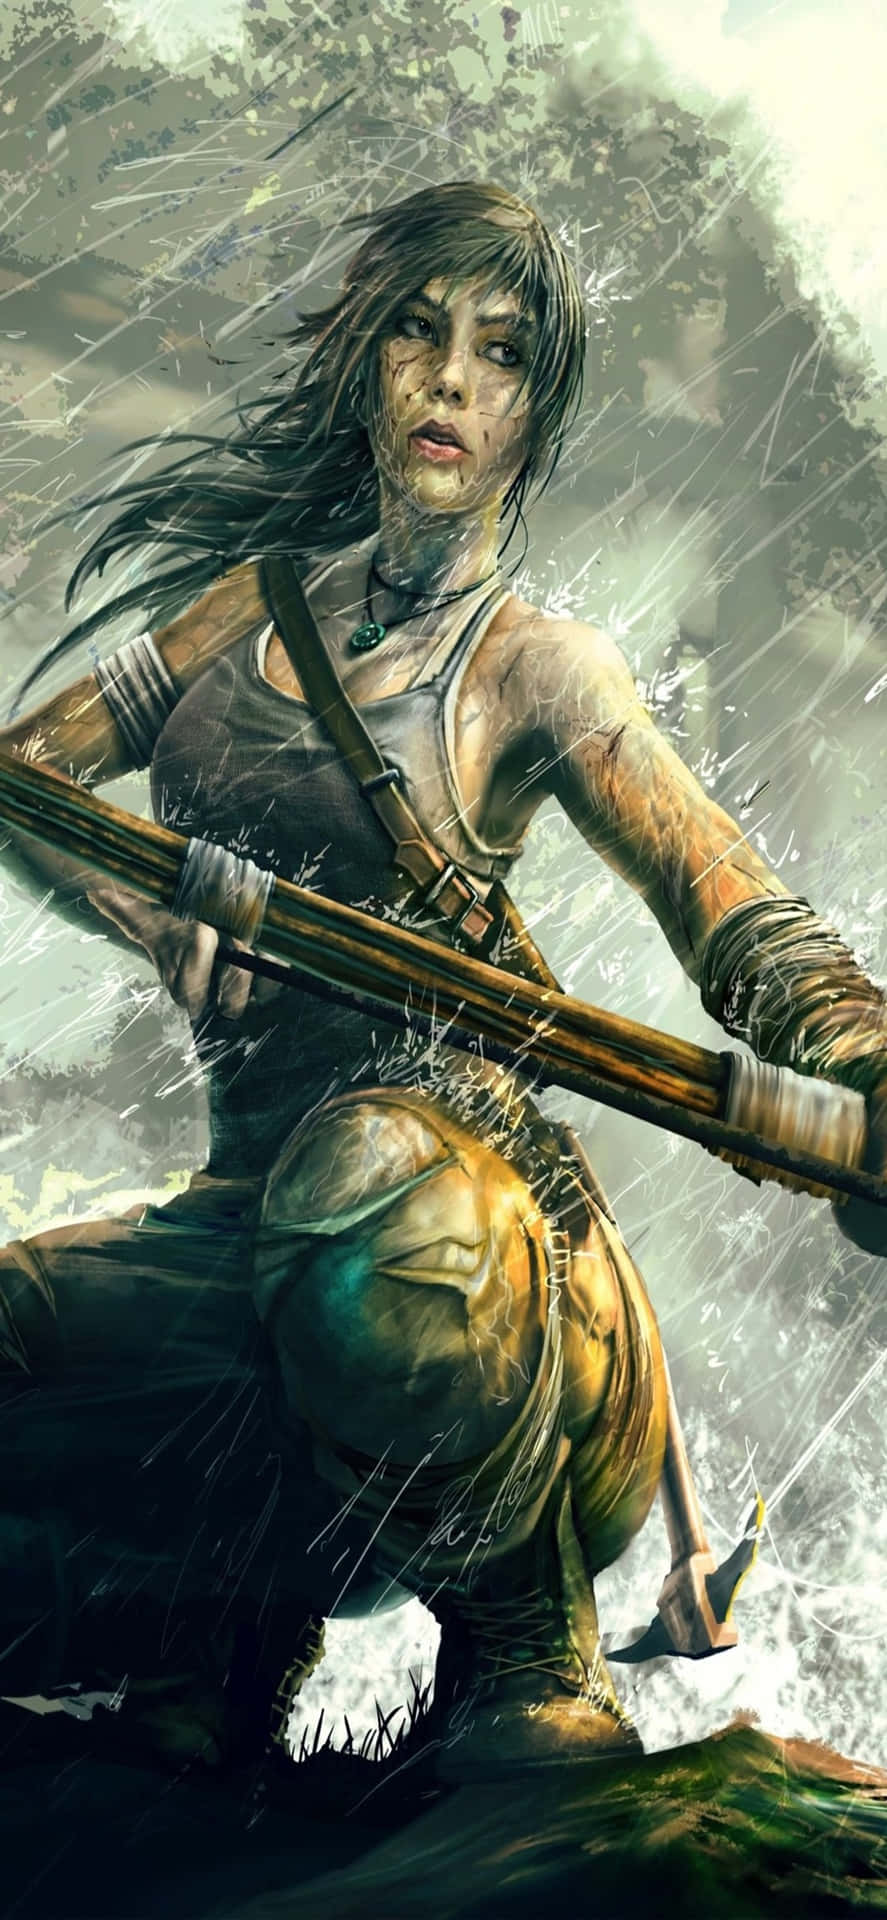 Plano De Fundo Do Iphone X Rise Of The Tomb Raider